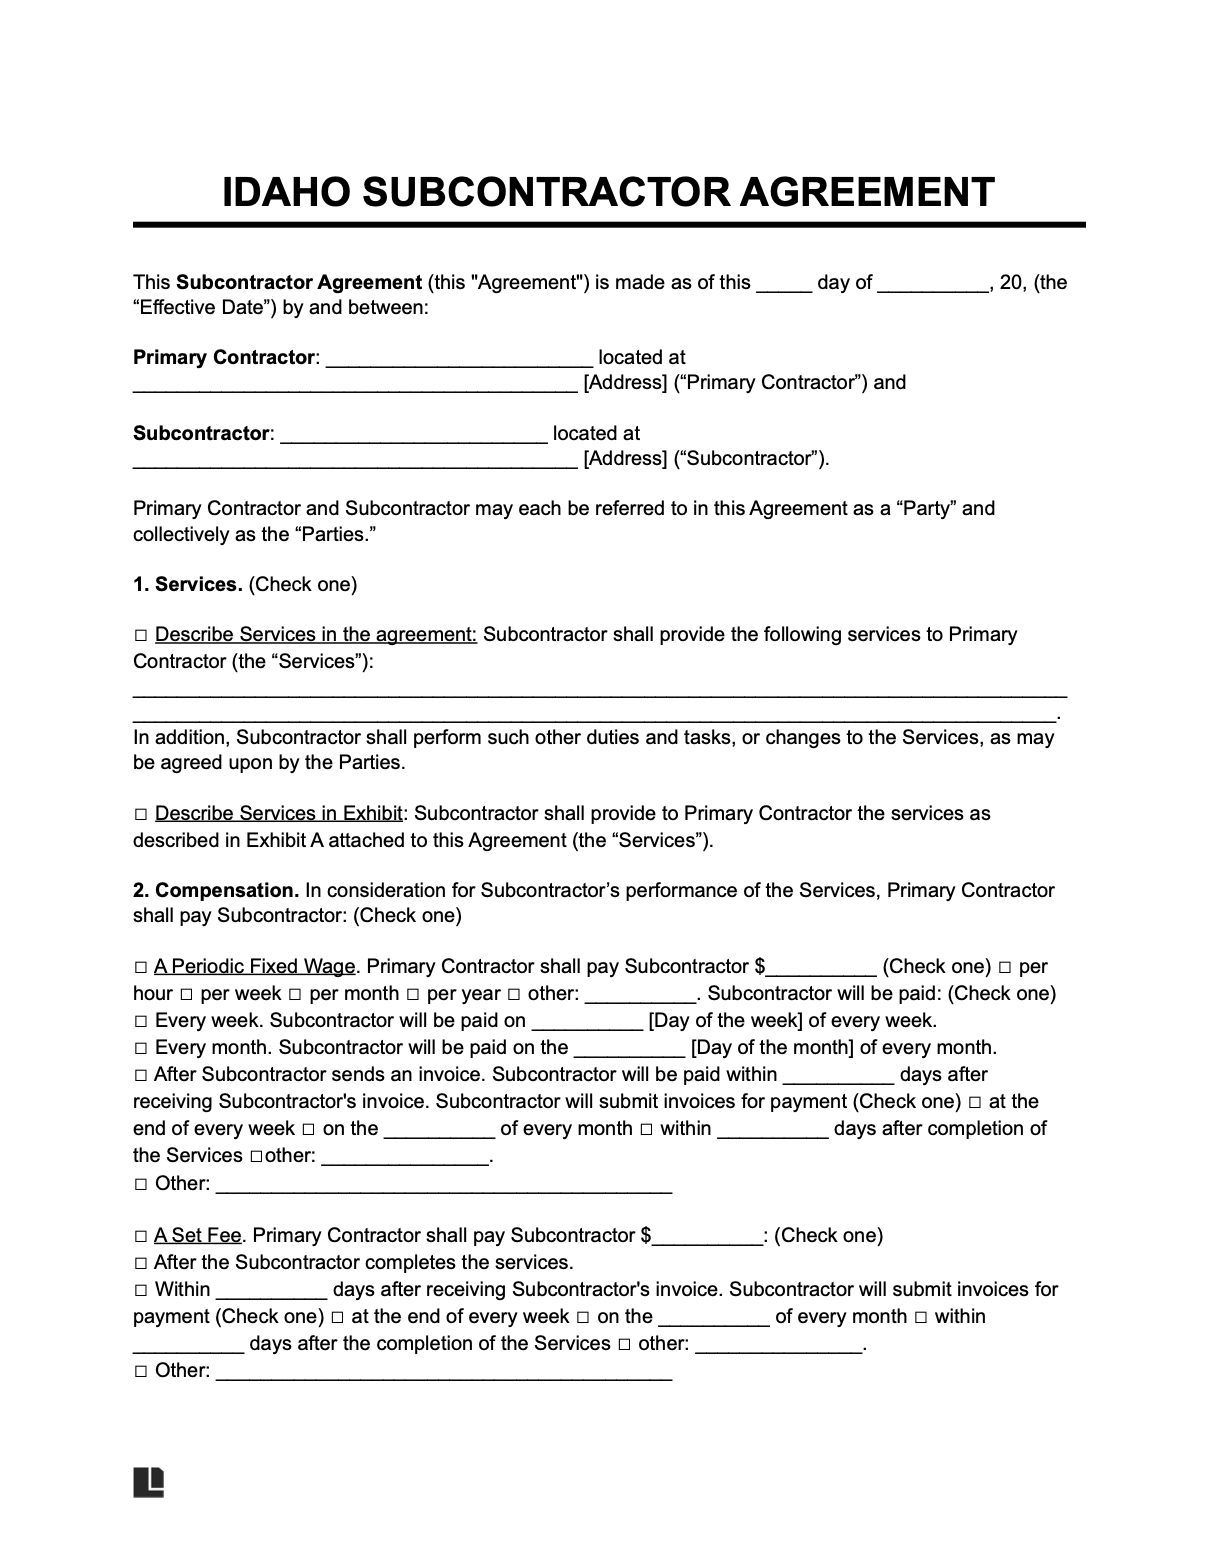 idaho subcontractor agreement template